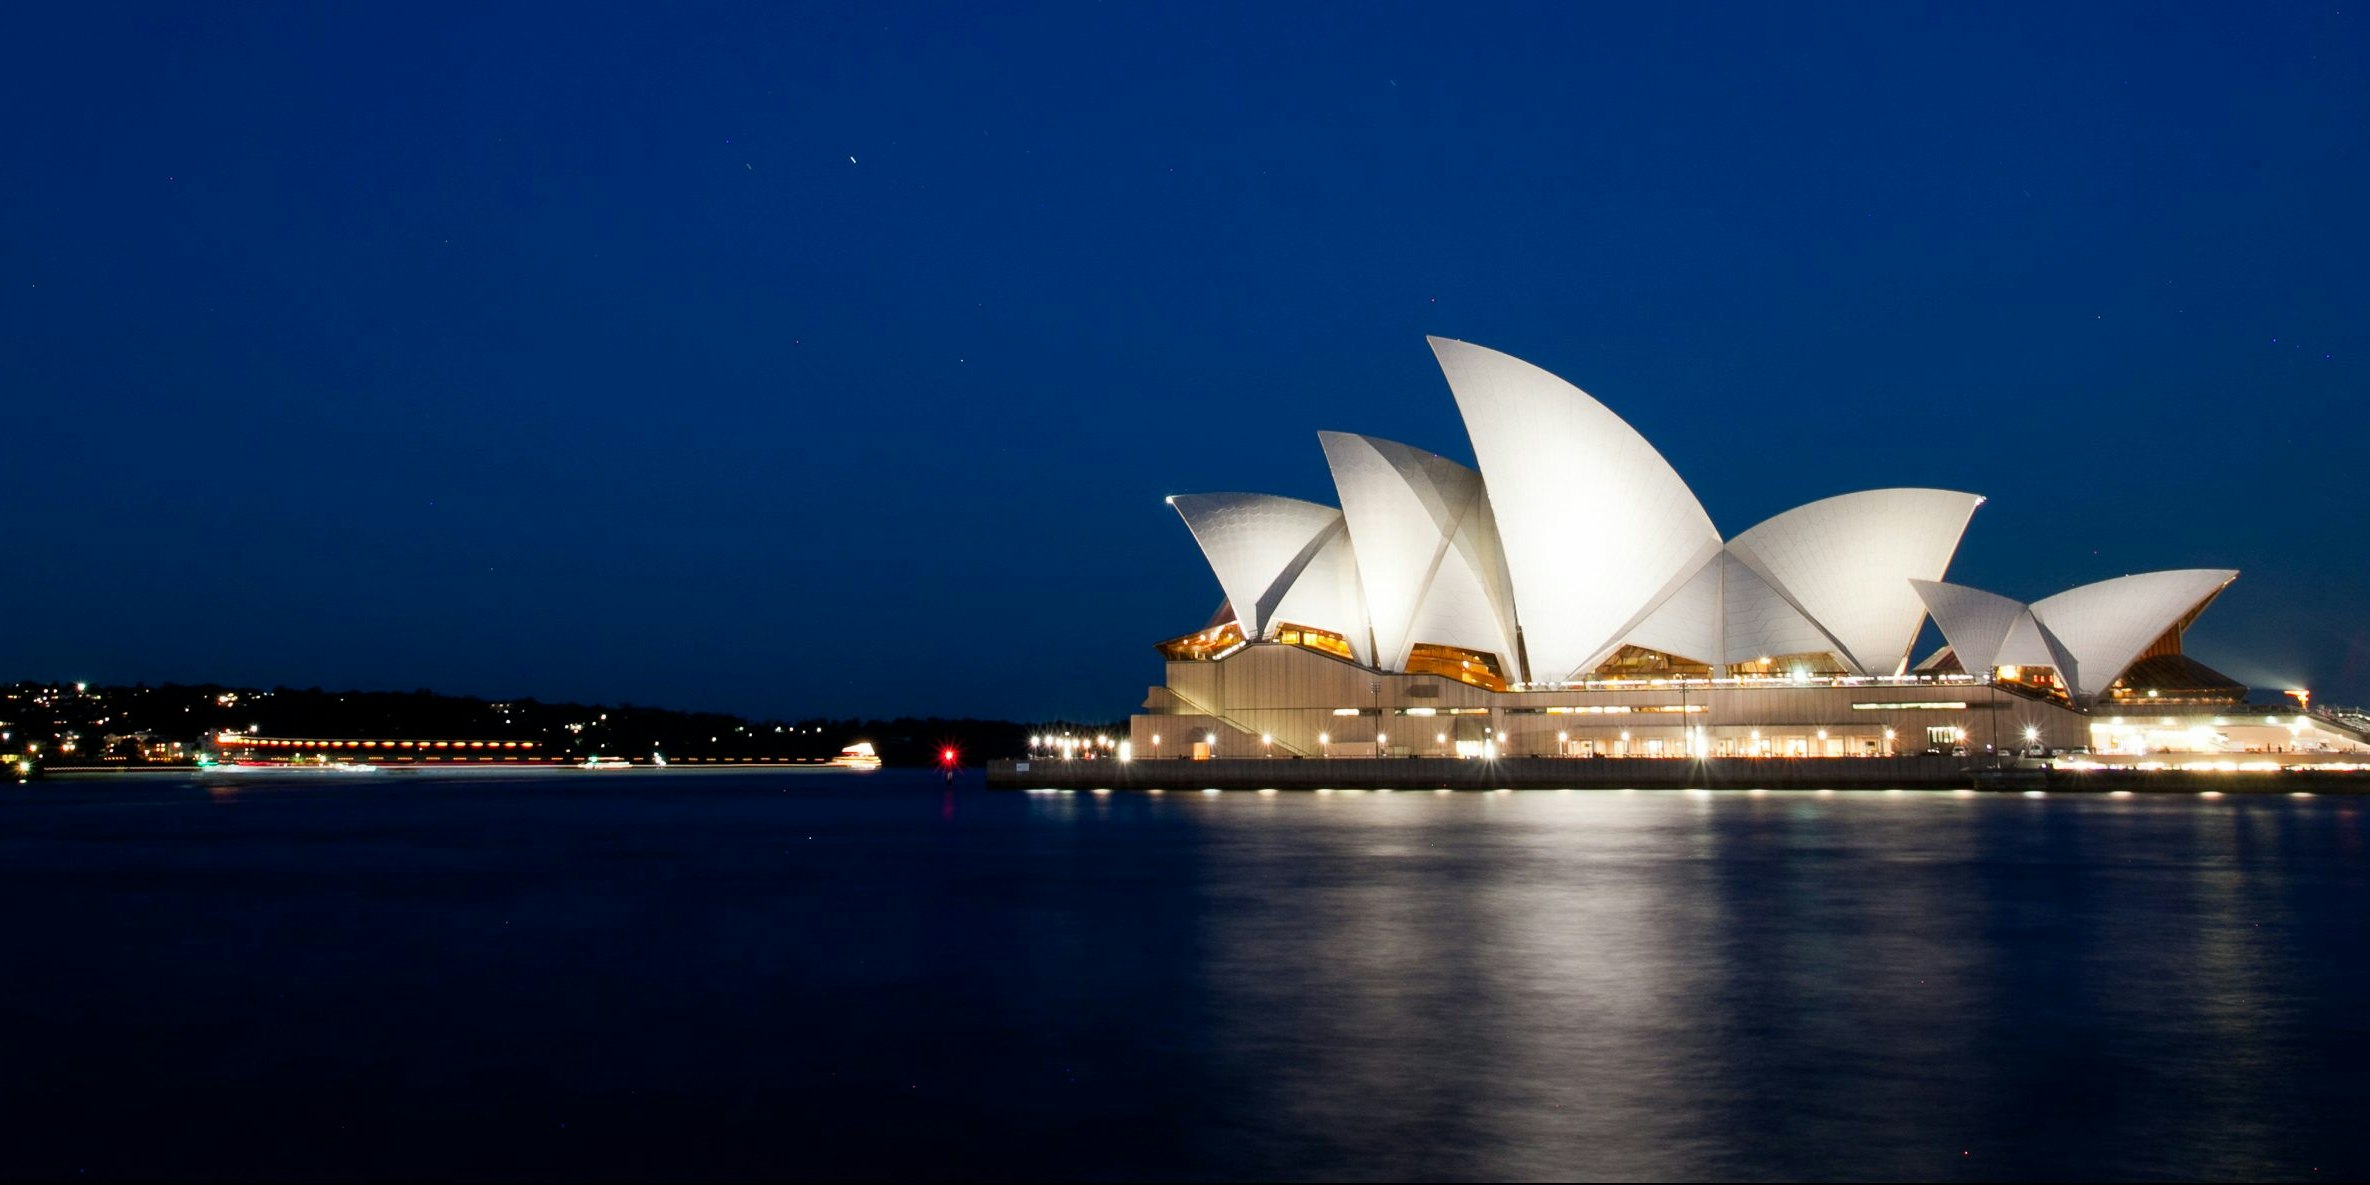 Australia: Sydney Sights and Service